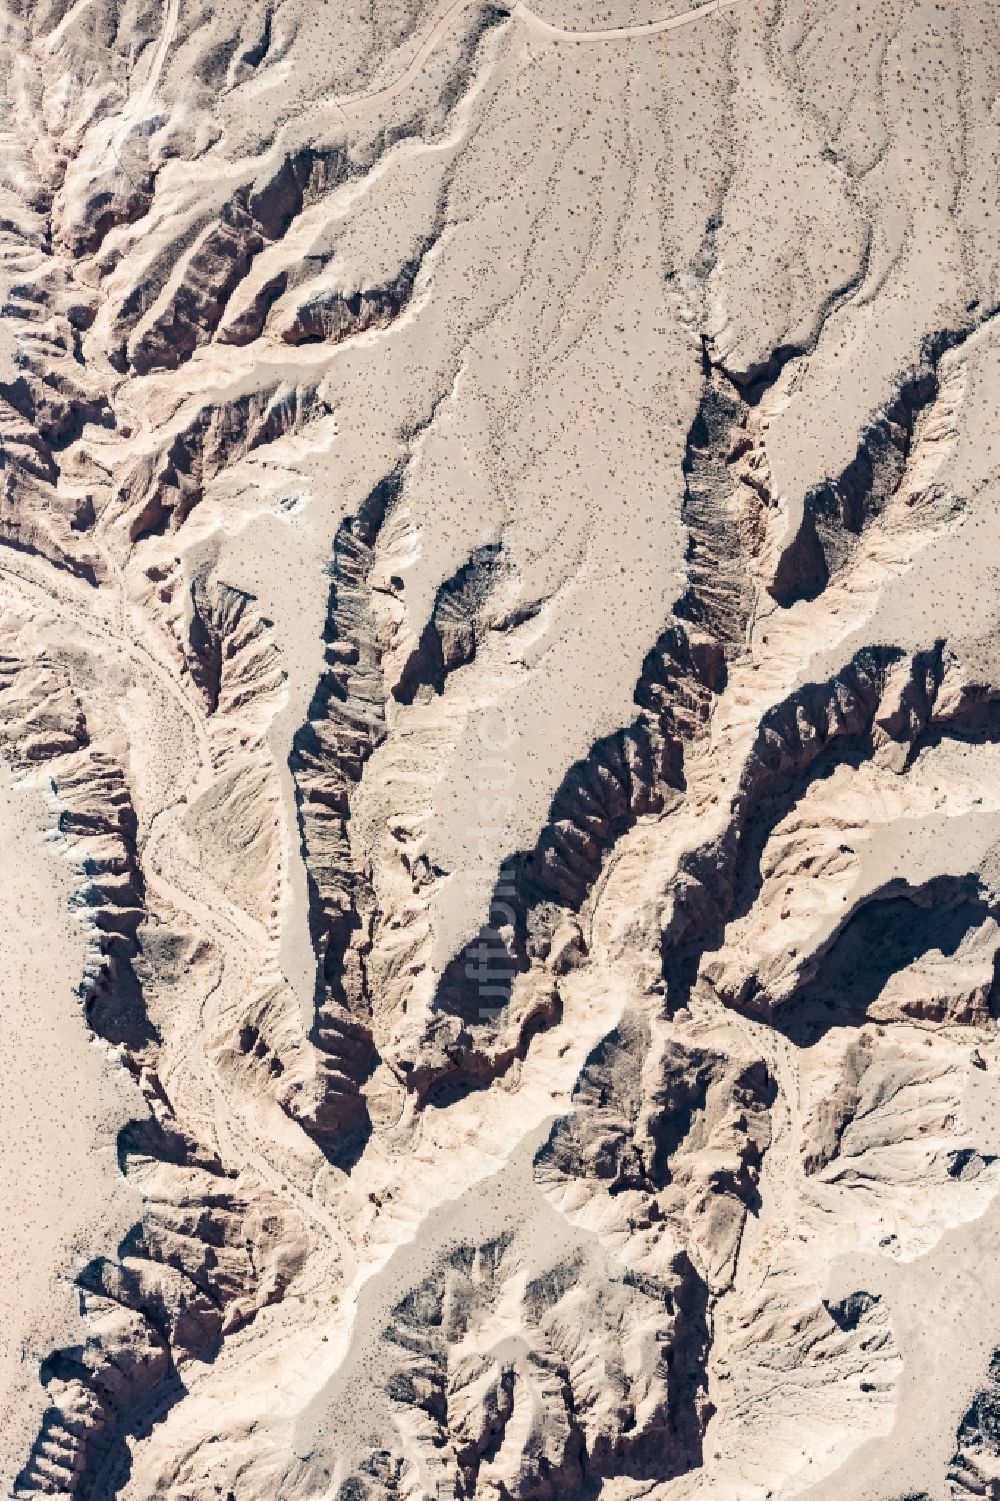 Luftbild Littlefield - Trockenwüsten- Landschaft in Littlefield in Arizona, USA